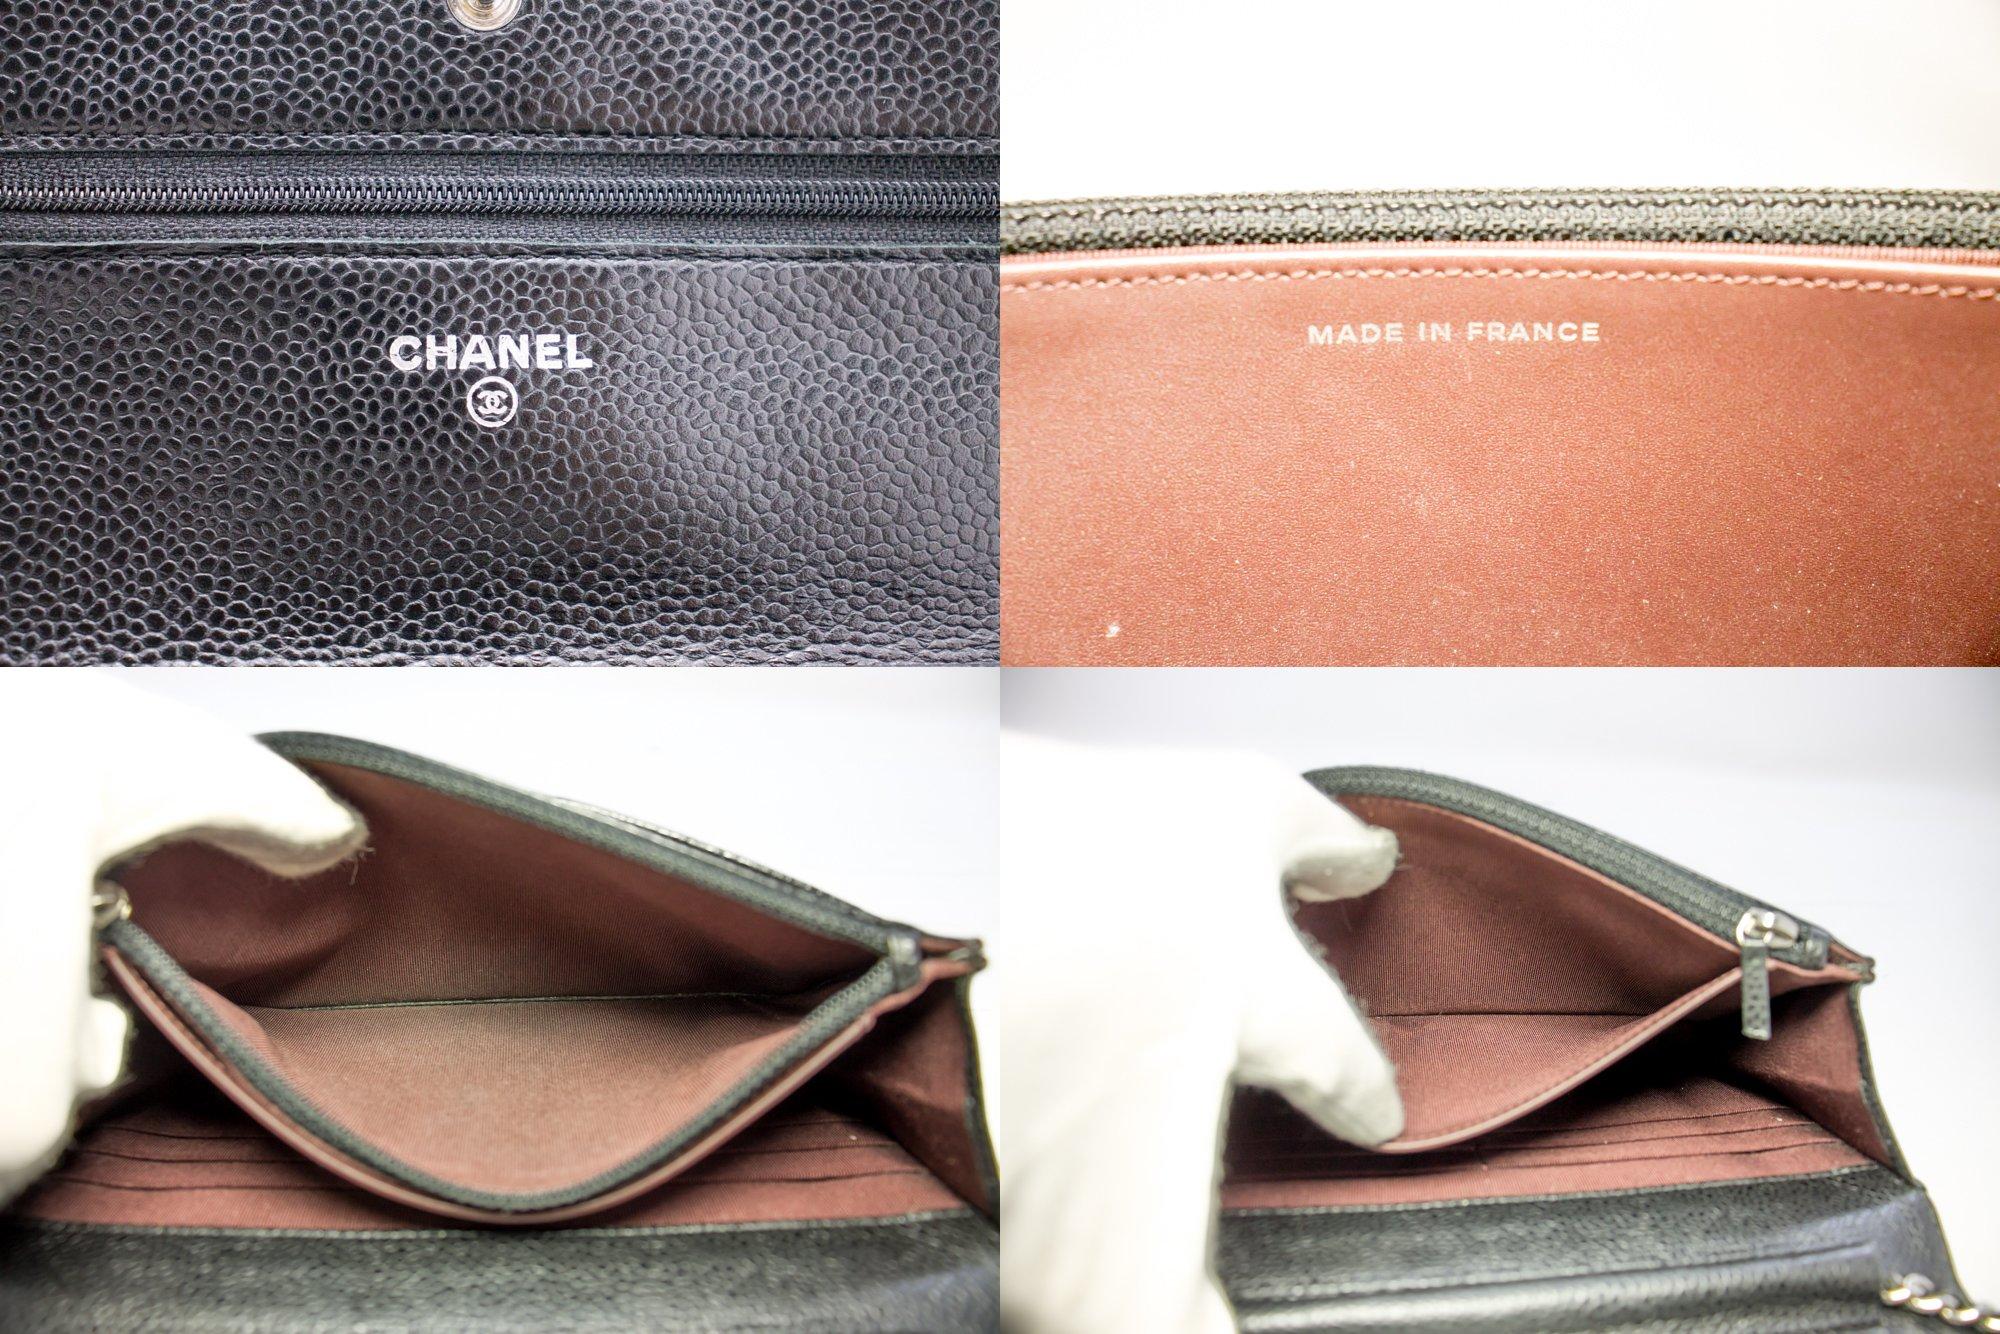 CHANEL Caviar WOC Wallet On Chain Black Shoulder Crossbody Bag 3